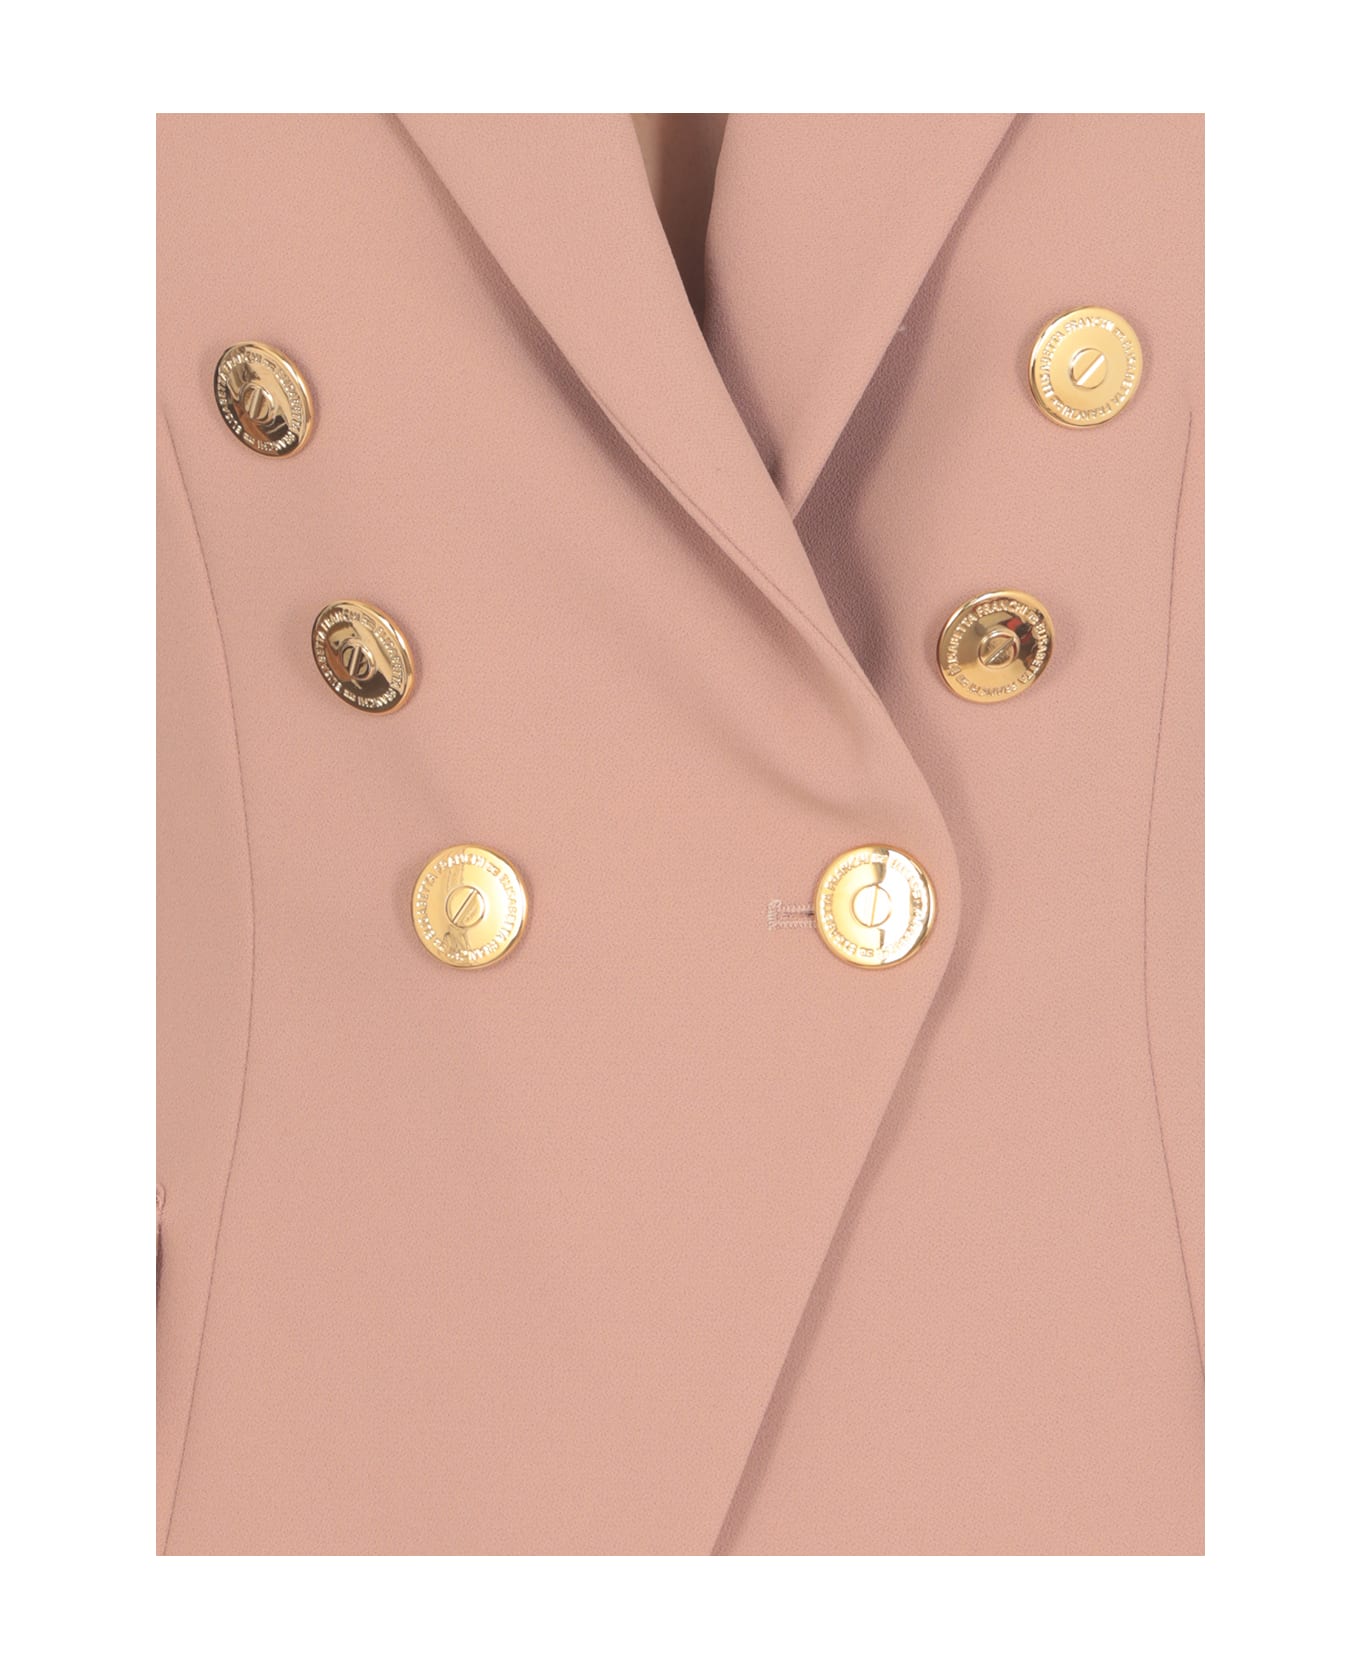 Elisabetta Franchi Double-breasted Jacket - Pink